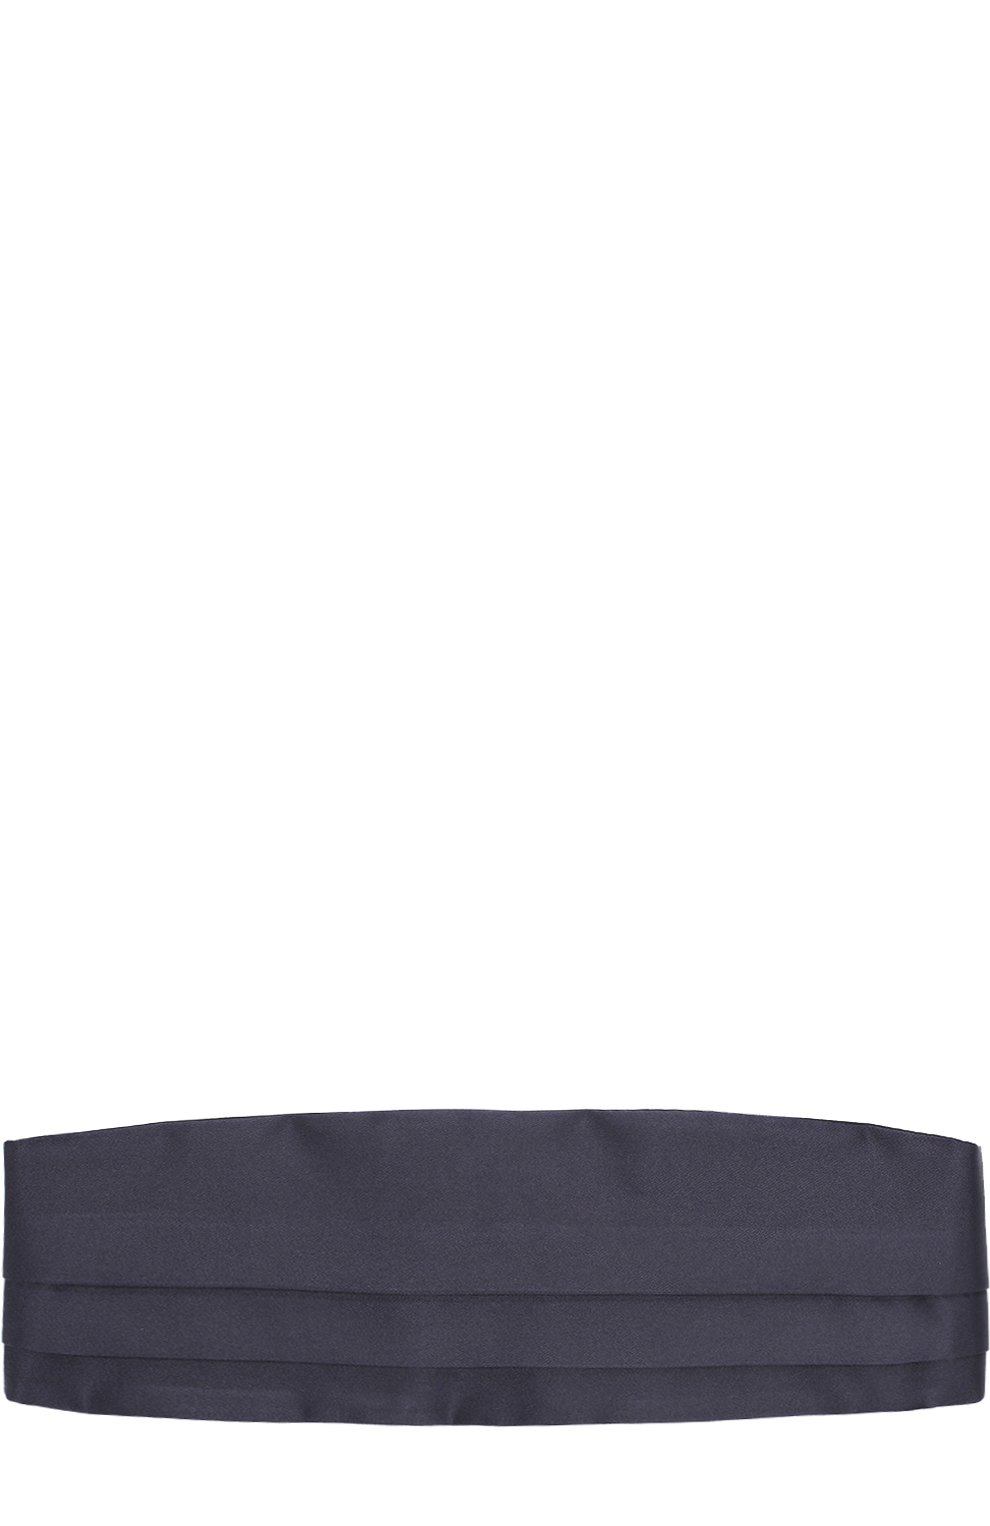 Мужской шелковый камербанд VALENTINO темно-синего цвета, арт. NU2EY002/RUN | Фото 1 (Материал: Текстиль, Шелк; Материал сплава: Проставлено, Проверено; Нос: Не проставлено)